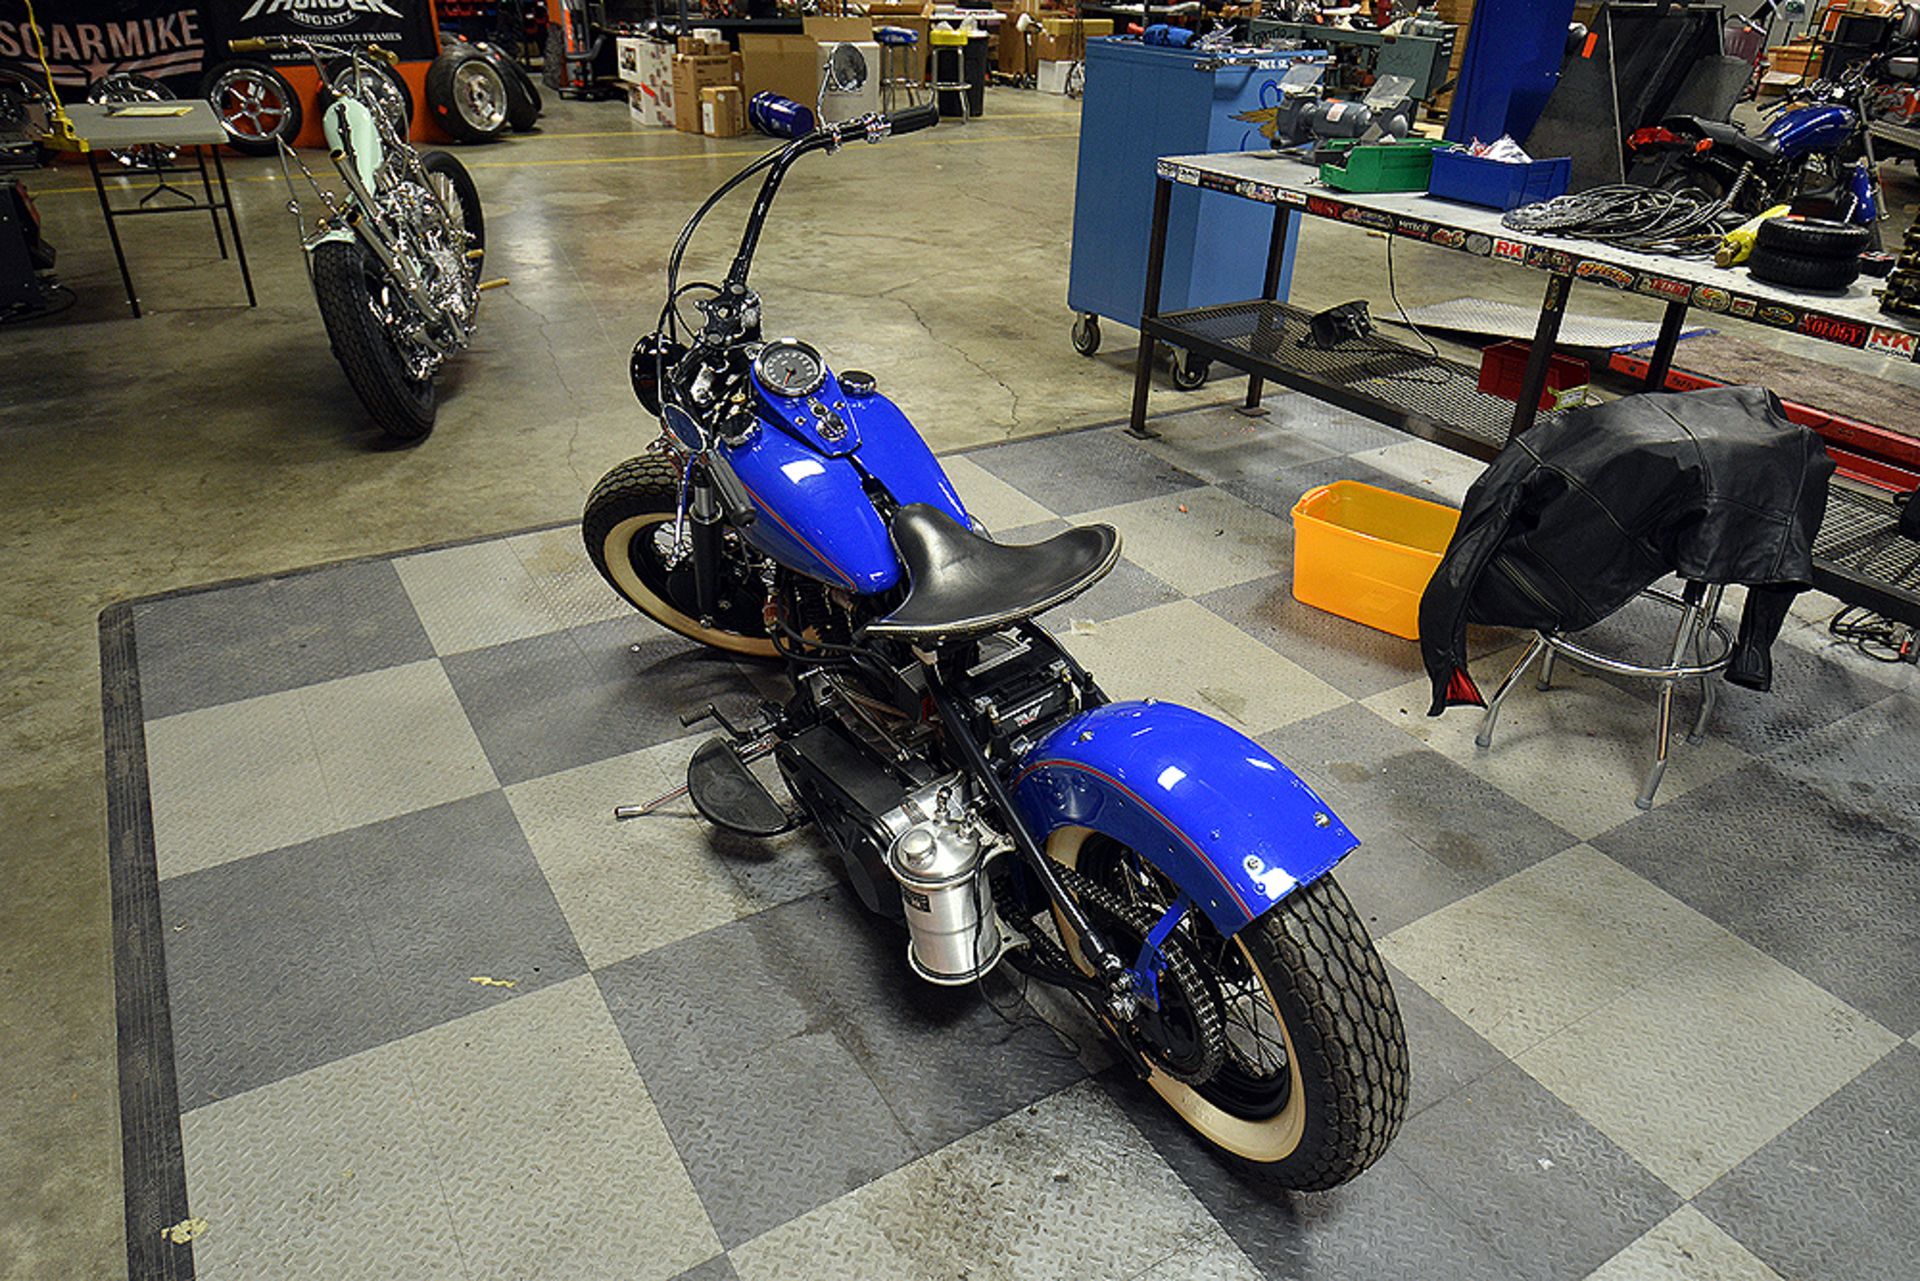 2008 OCC Custom Harley Davidson Motorcycle - Image 3 of 4